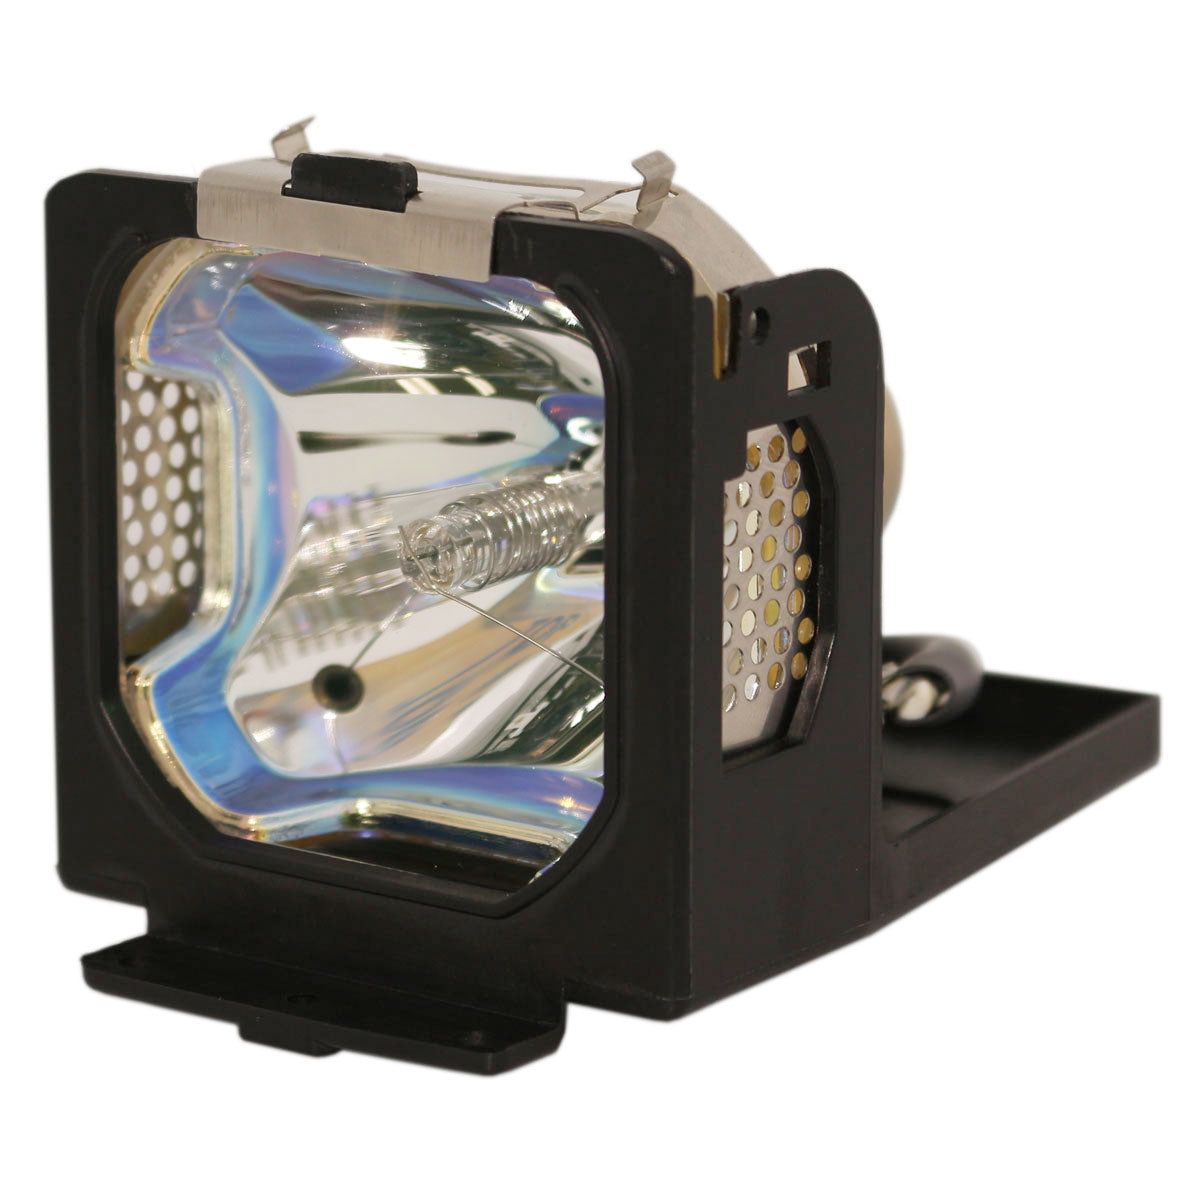 Boxlight XP9TA-930 Osram Projector Lamp Module